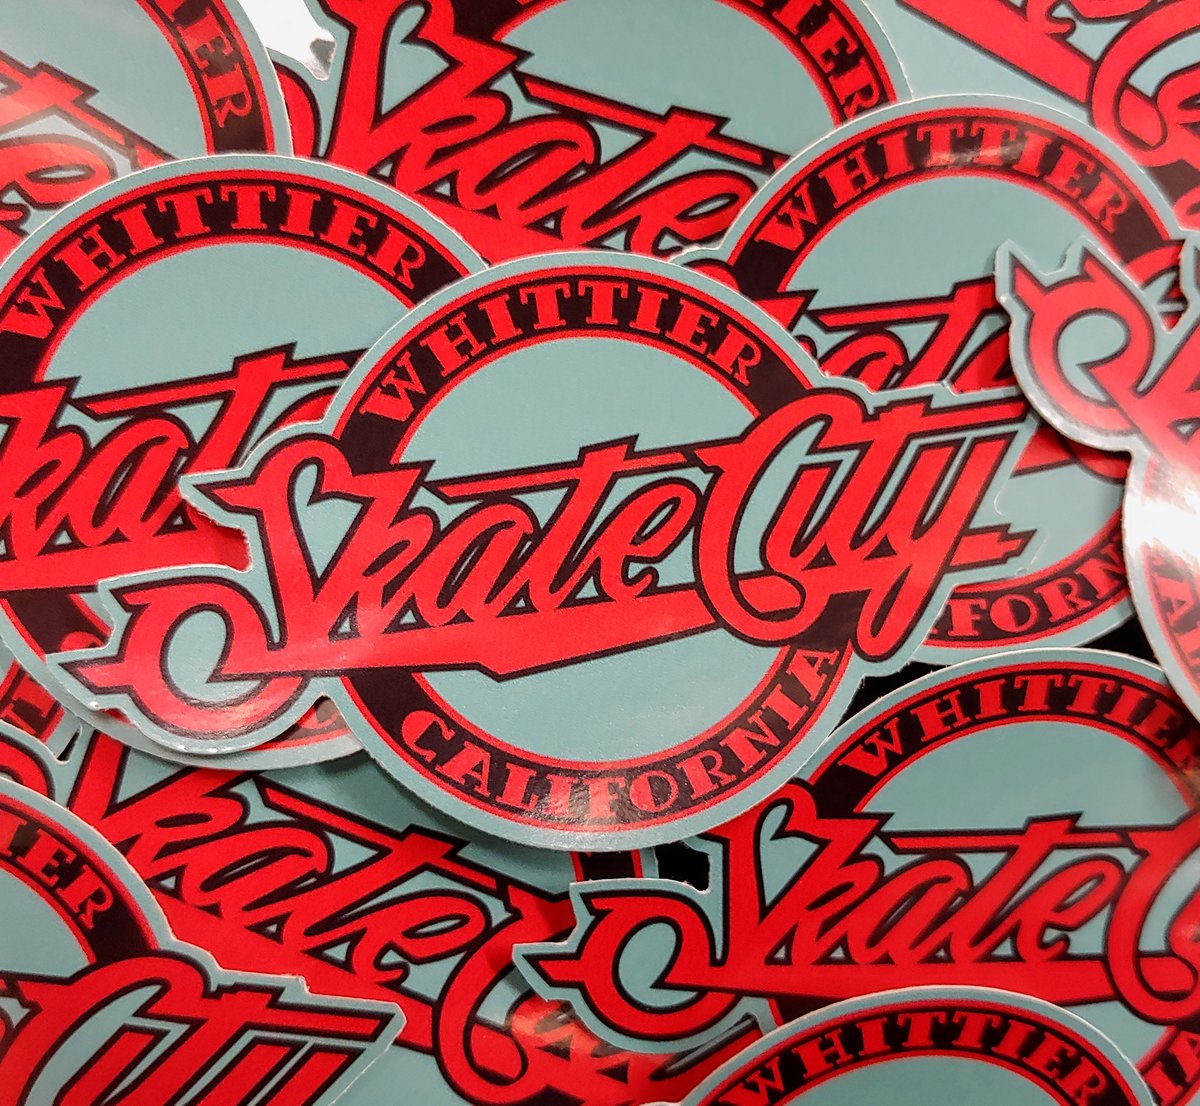 Whittier Skate City stickers